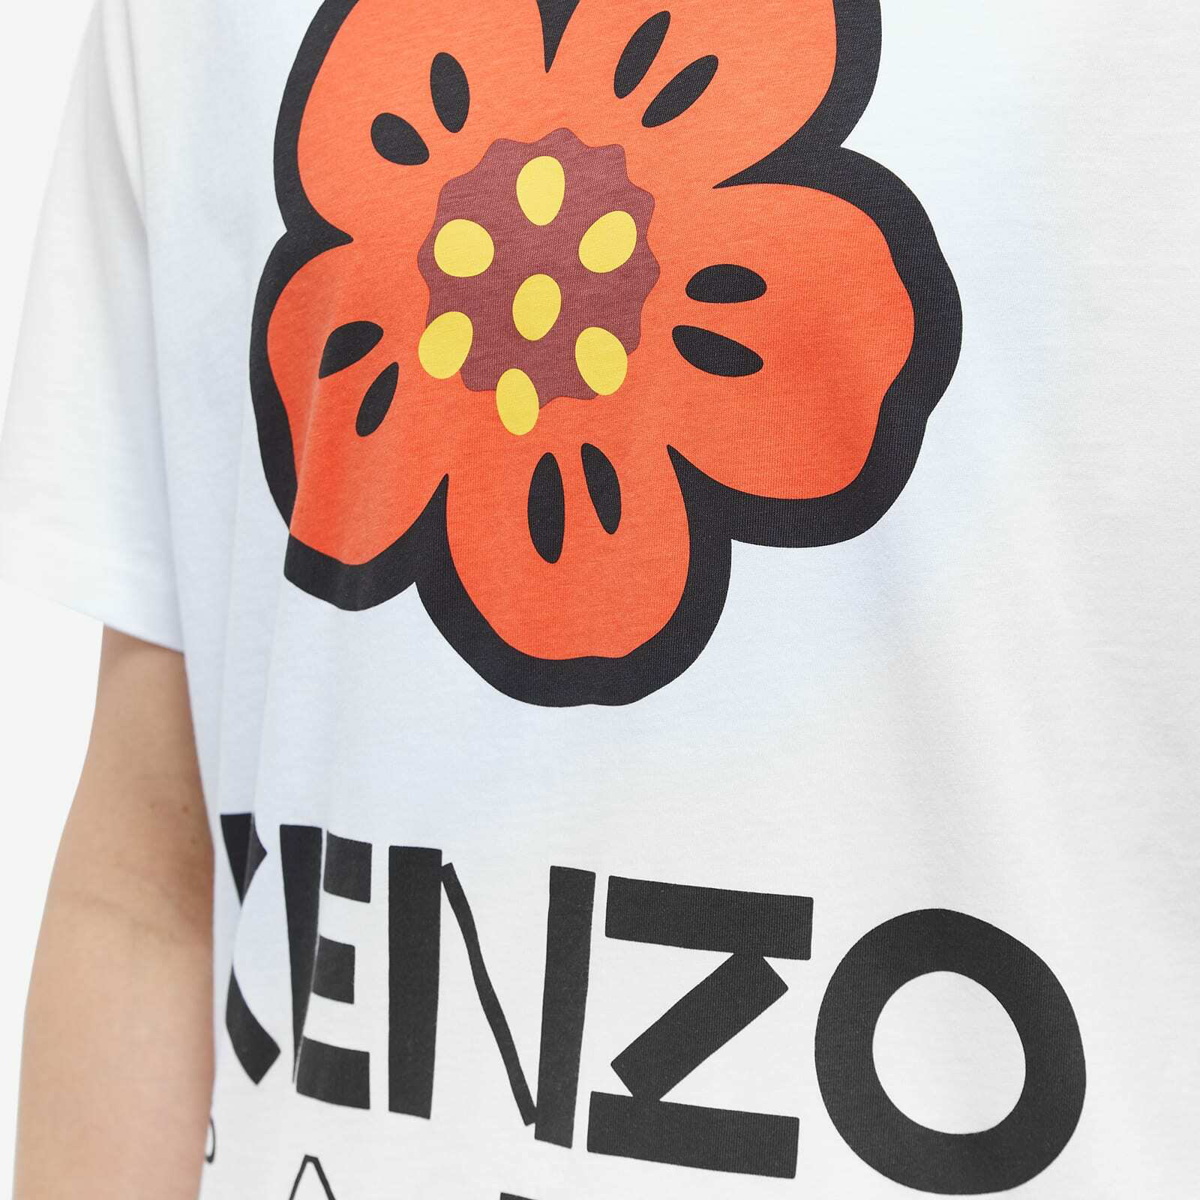 KENZO x Nigo Womens Boke Flower Crewneck Sweatshirt Pearl Grey